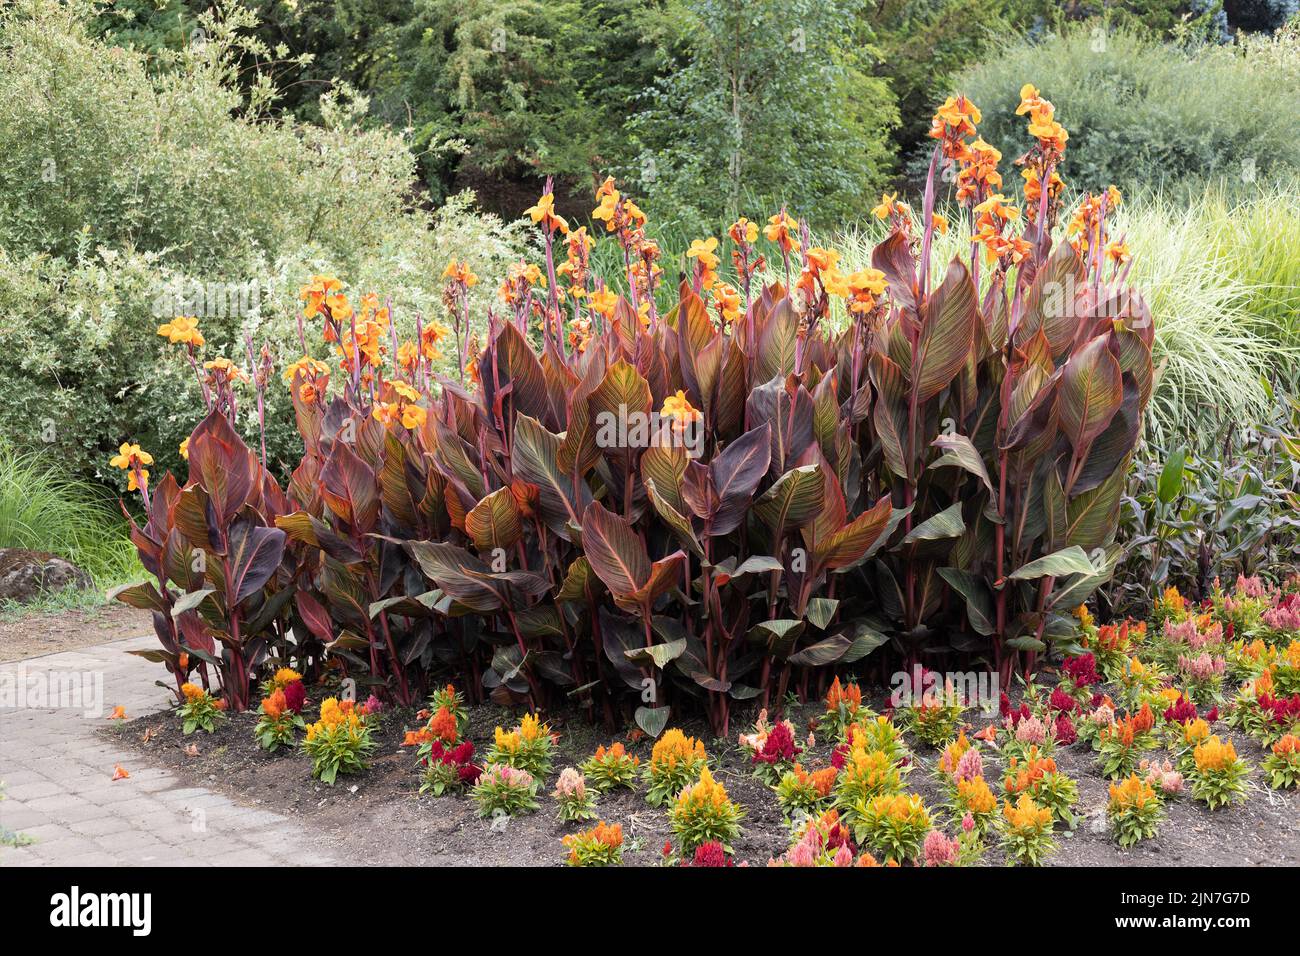 Un jardín de flores de colores cálidos. Foto de stock